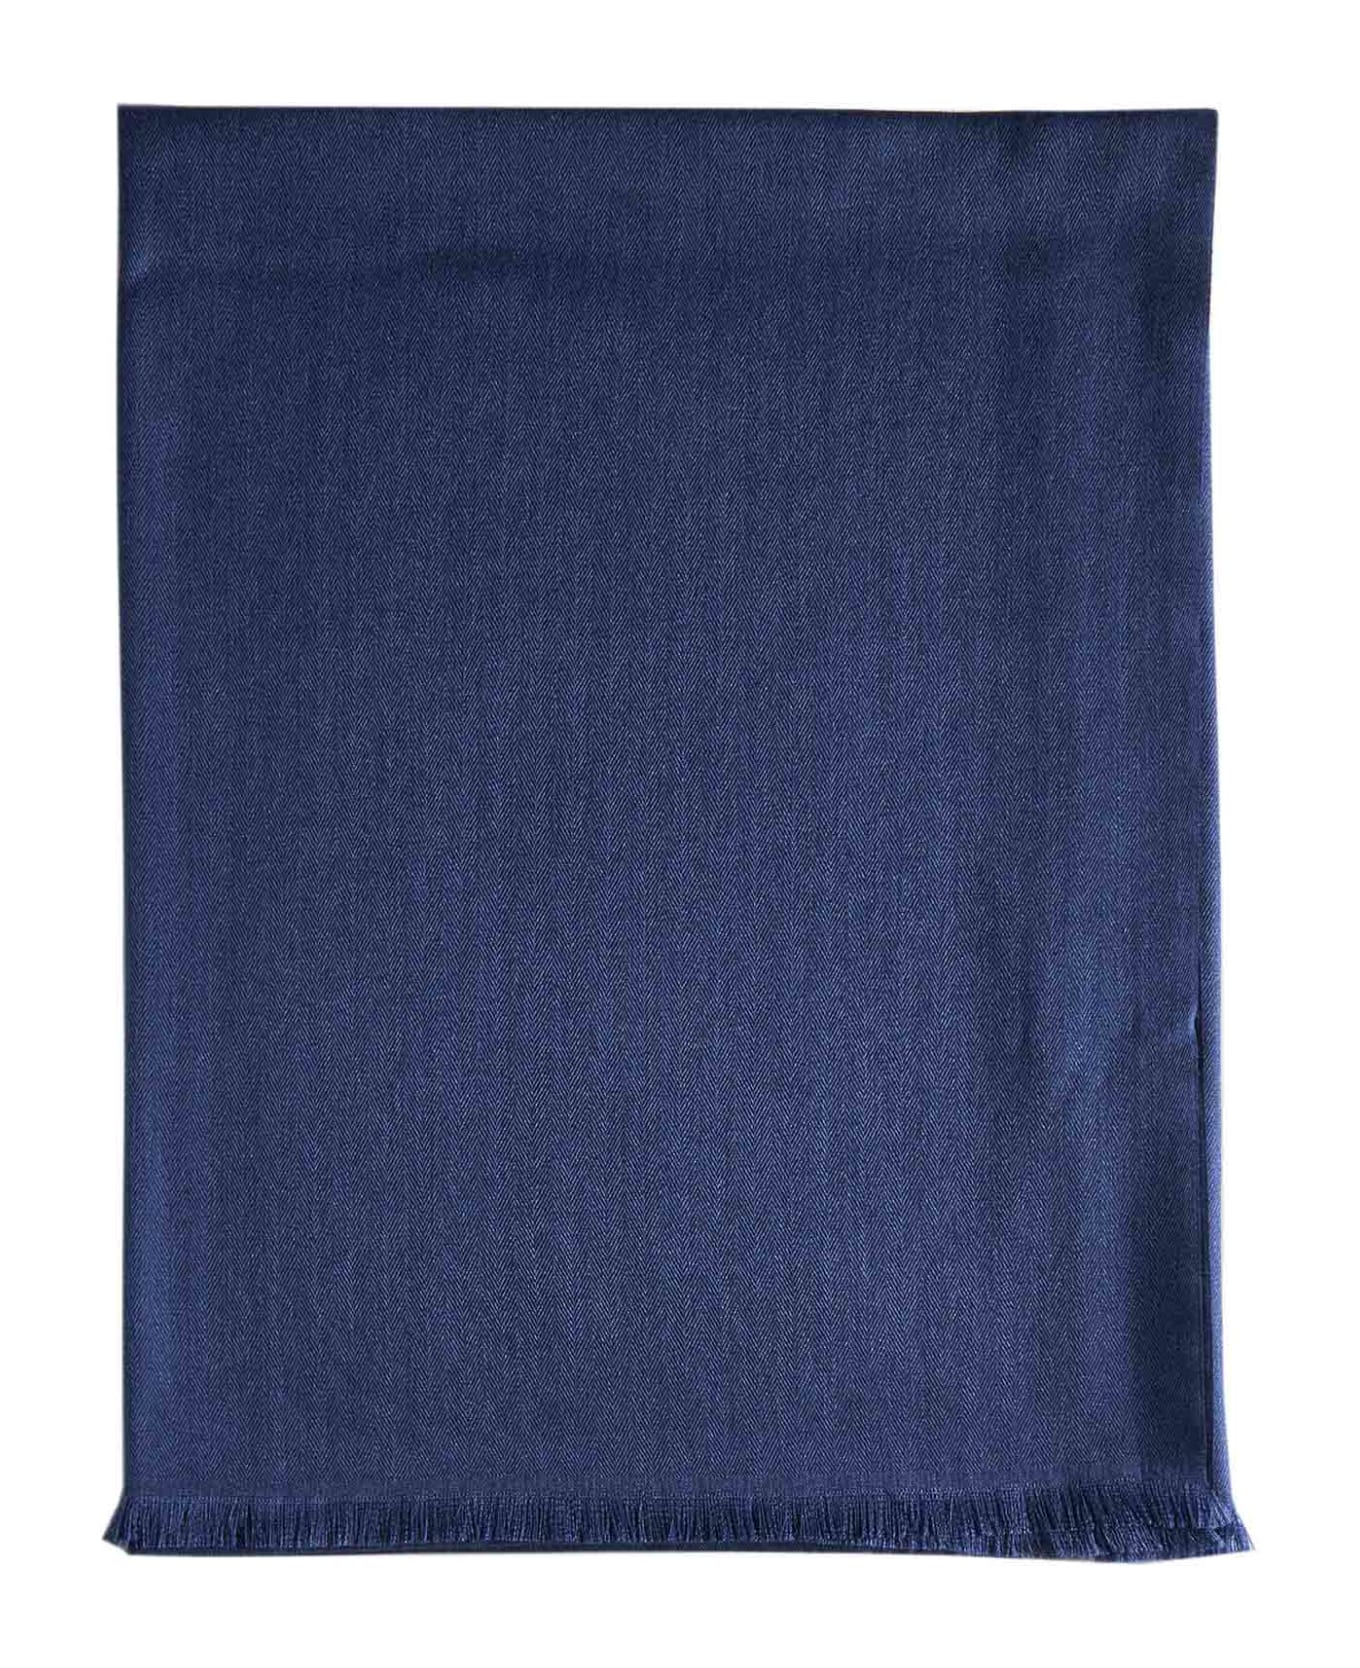 Caruso Scarf - Mid blue スカーフ